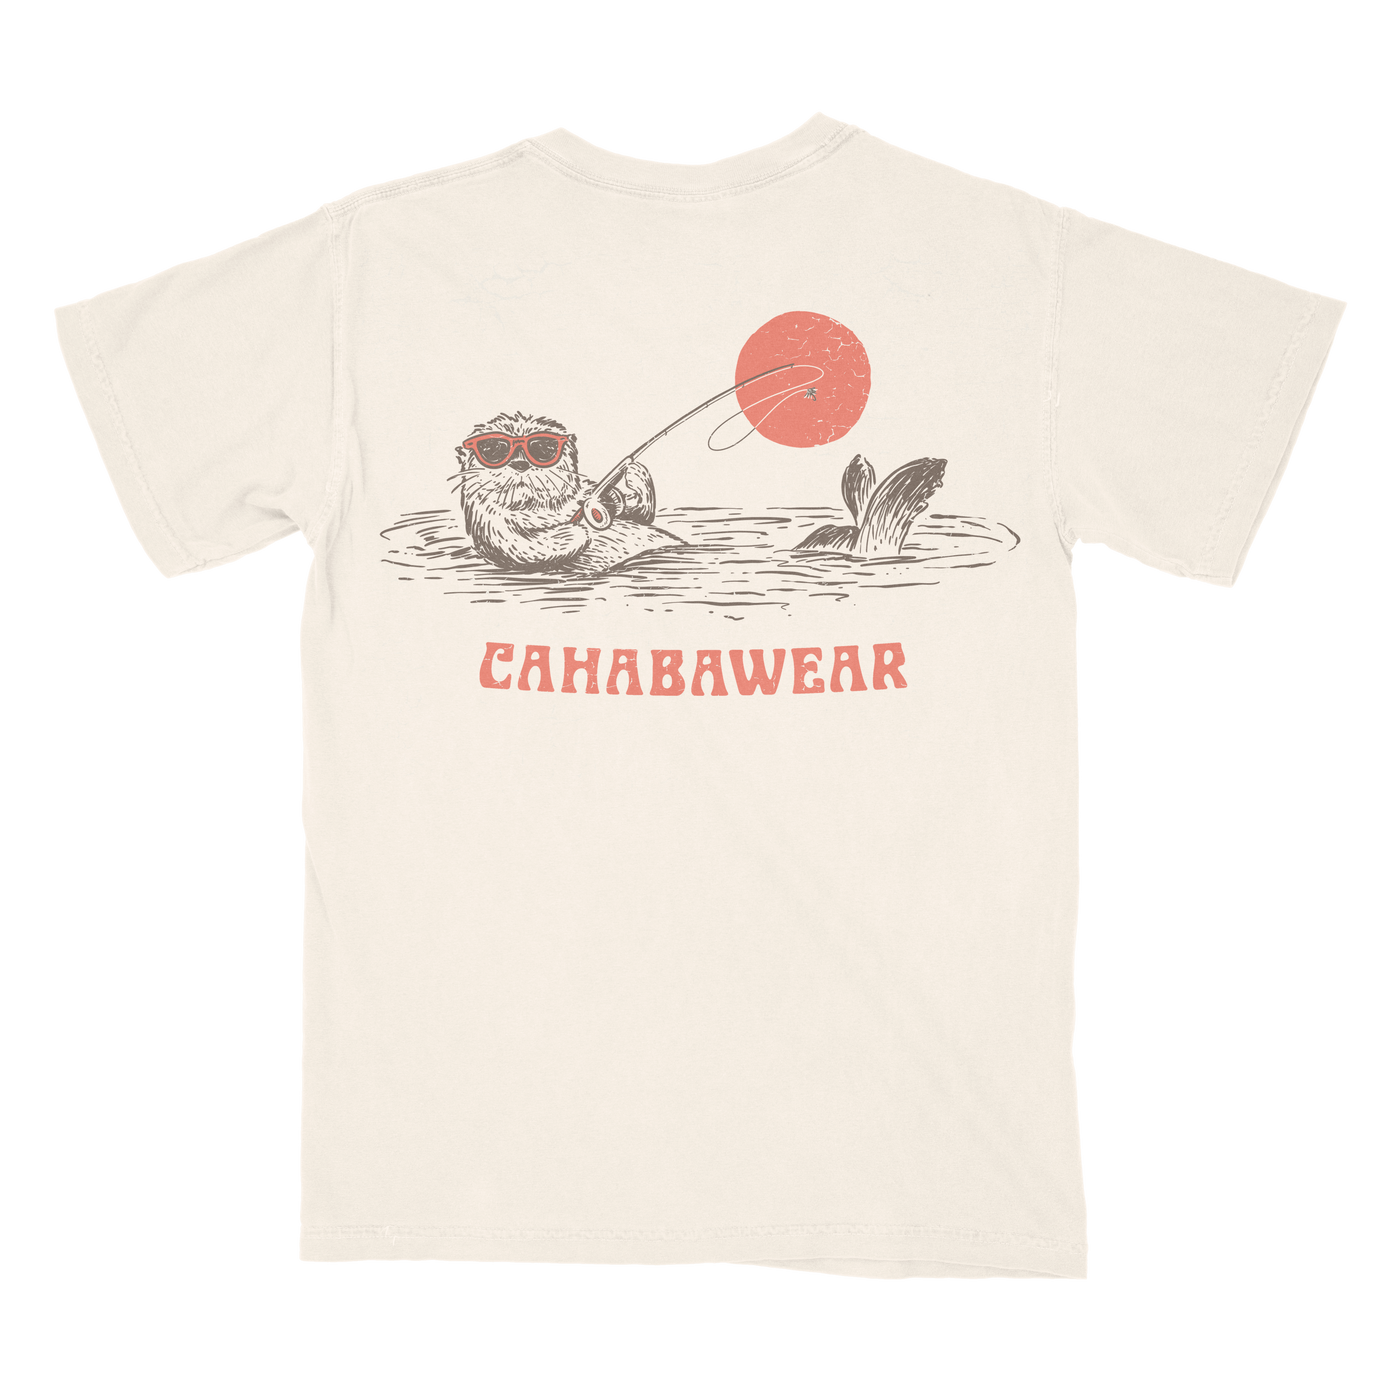 Cahabawear Otter Short Sleeve